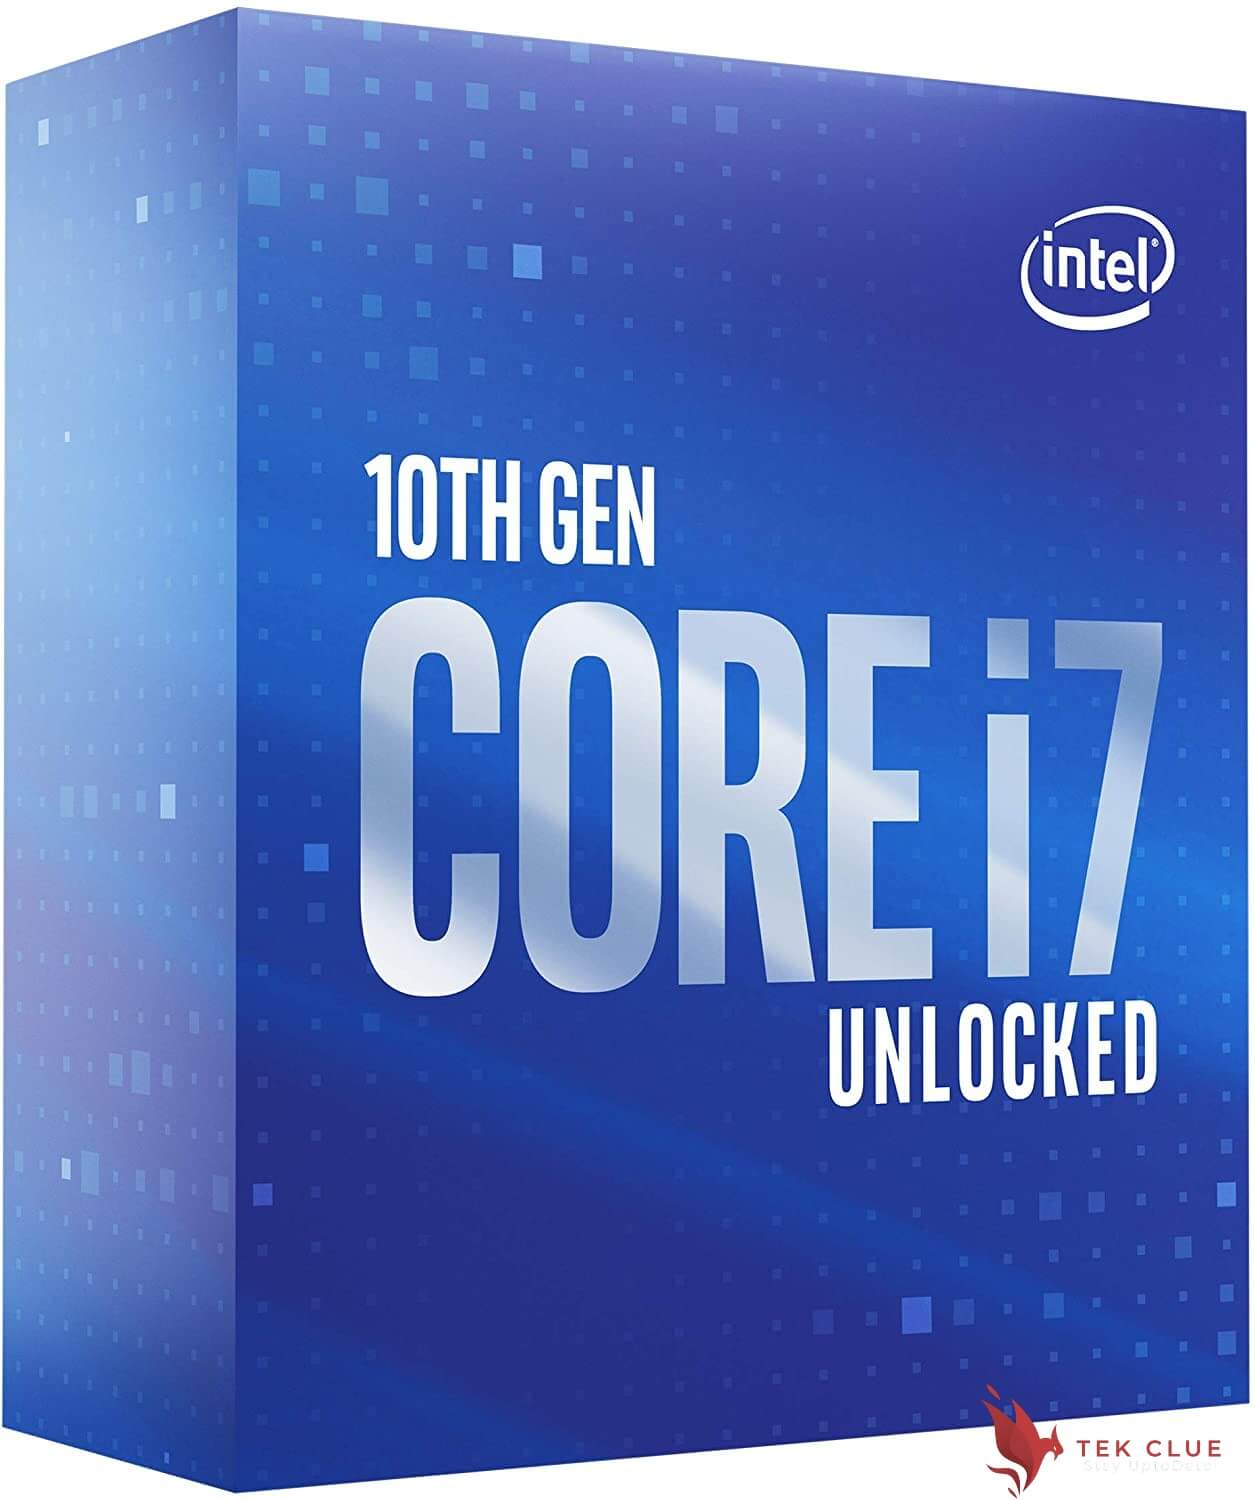  Intel-Core-i7-10700K-Desktop-Processor-8-Cores-up-to-5.1-GHz-Unlocked-1-1.jpg